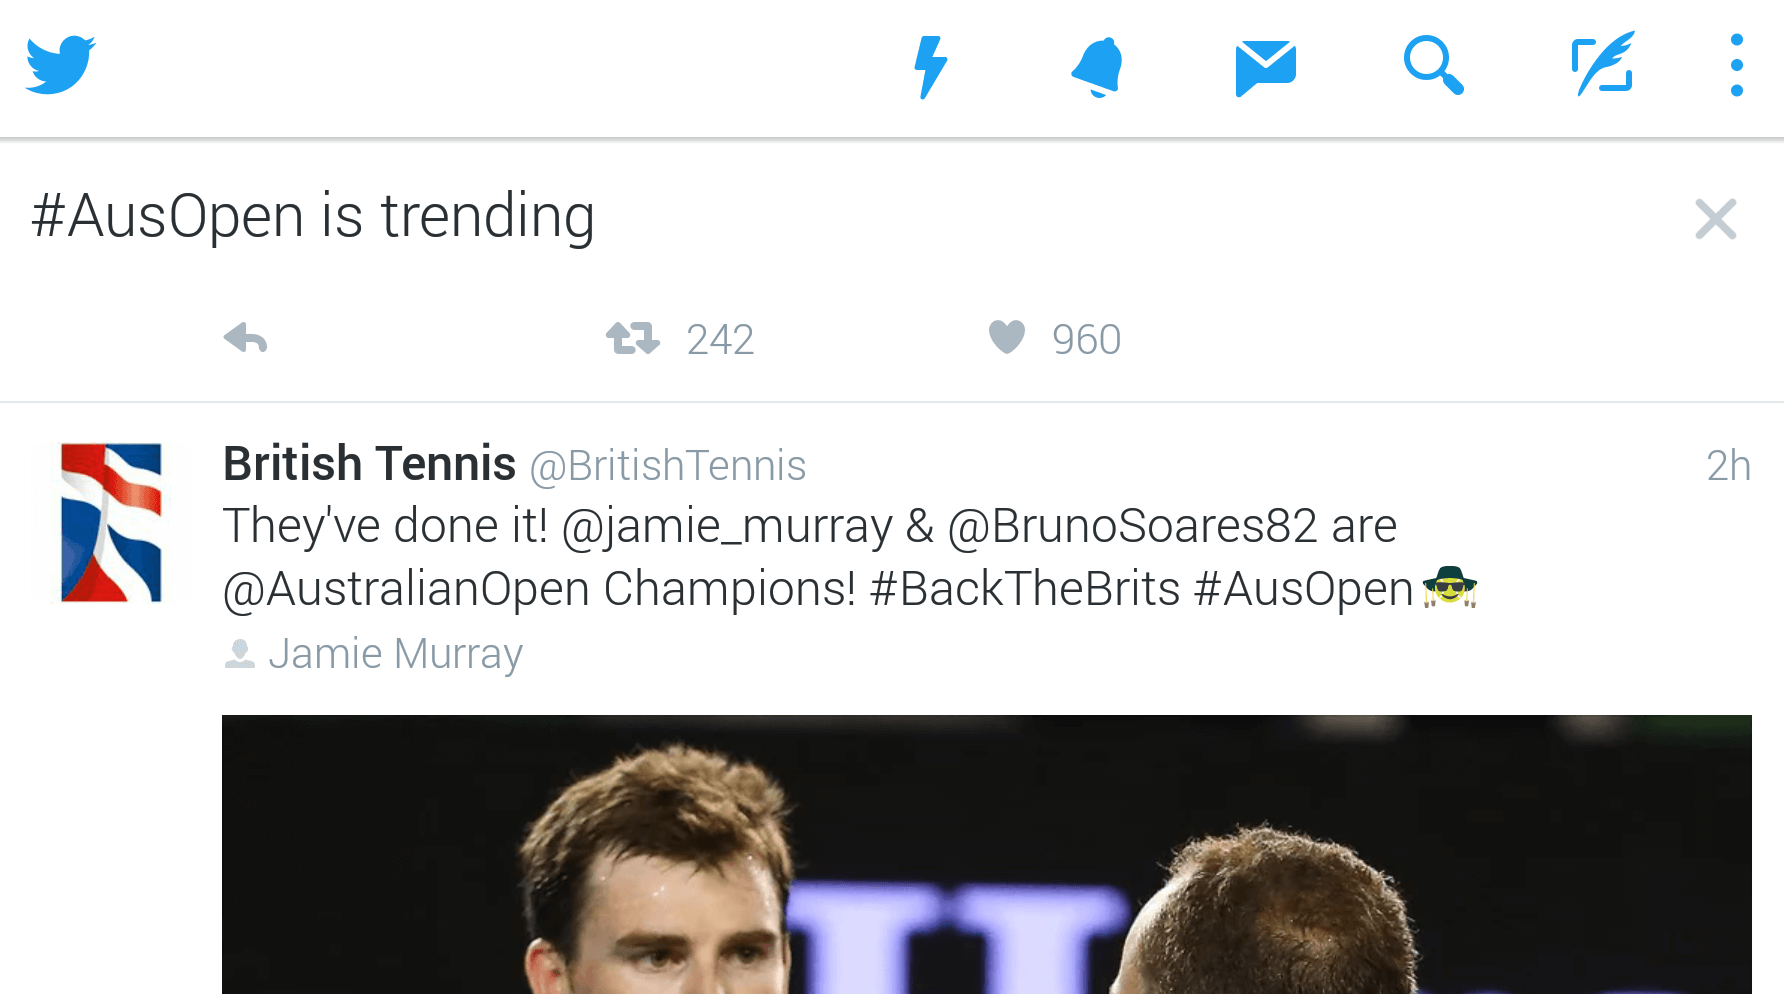 Tweet 2/5 in the "#AusOpen is trending" box in my timeline.